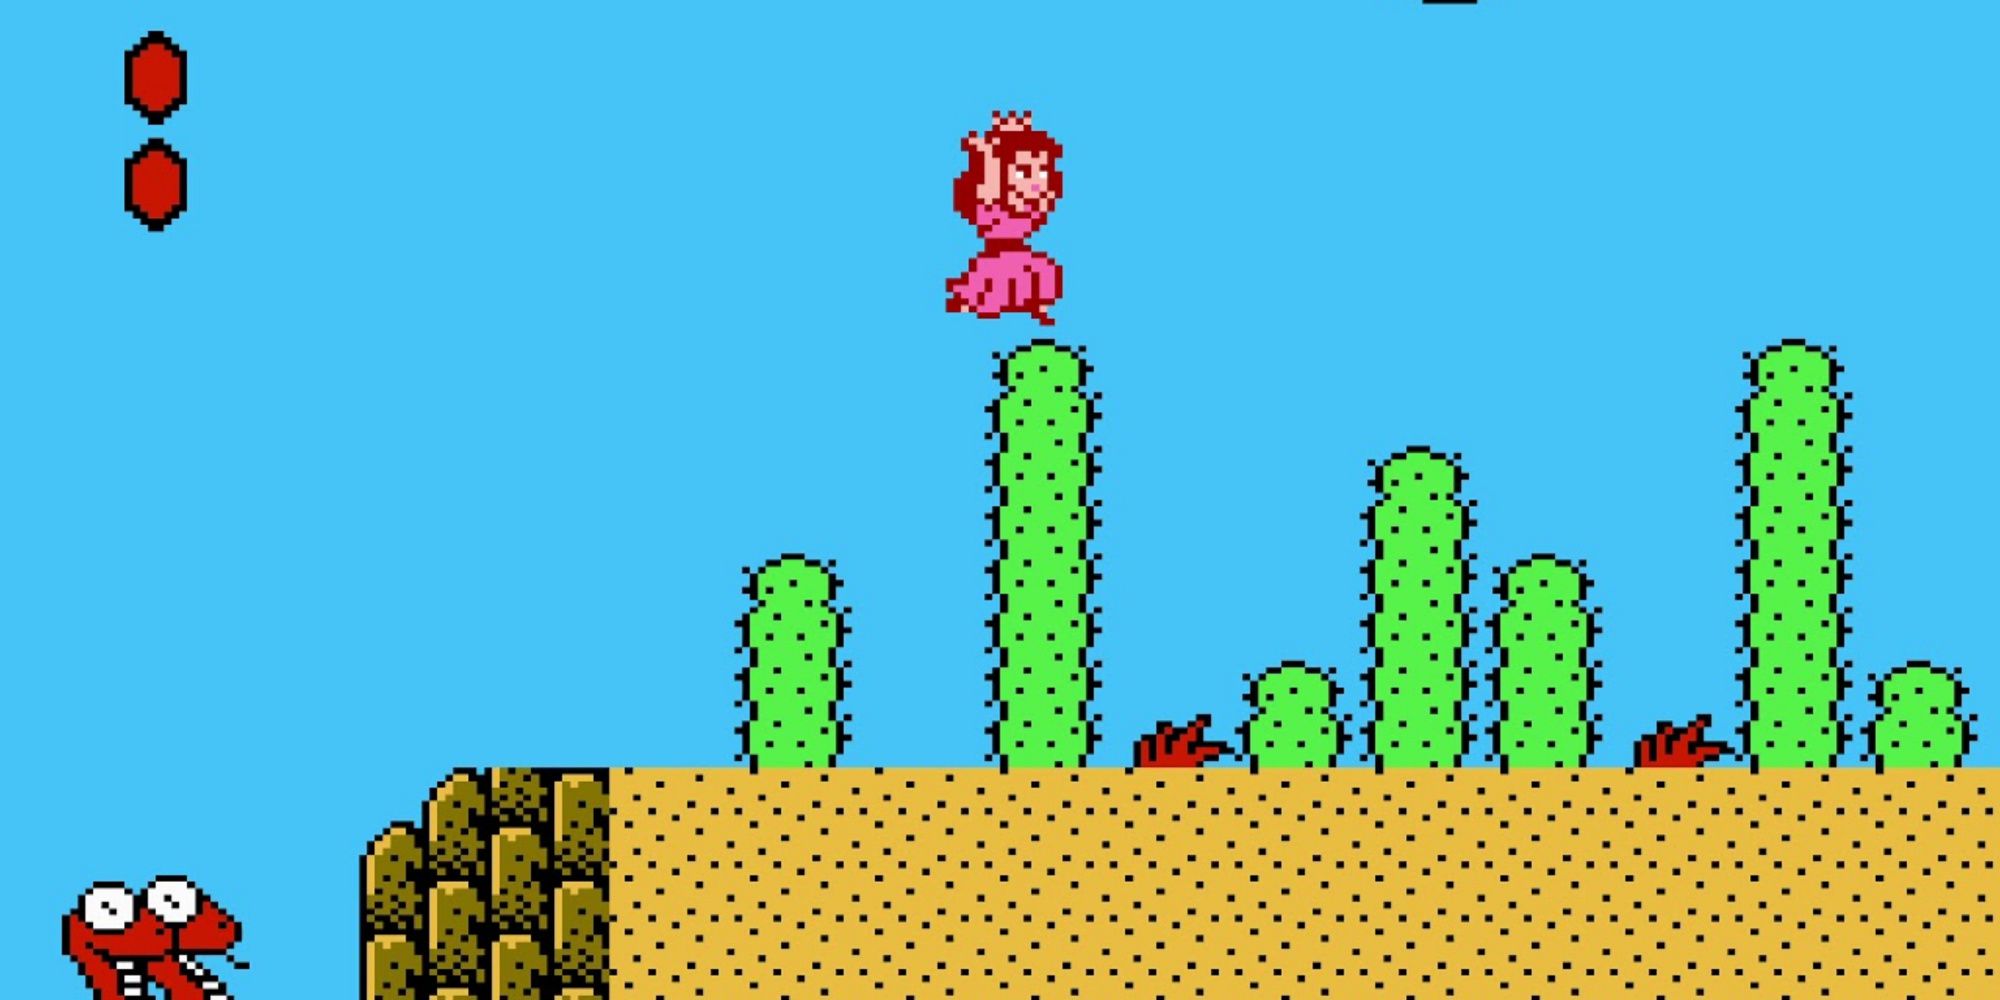 Playing a level as Princess Peach in Super Mario Bros. 2